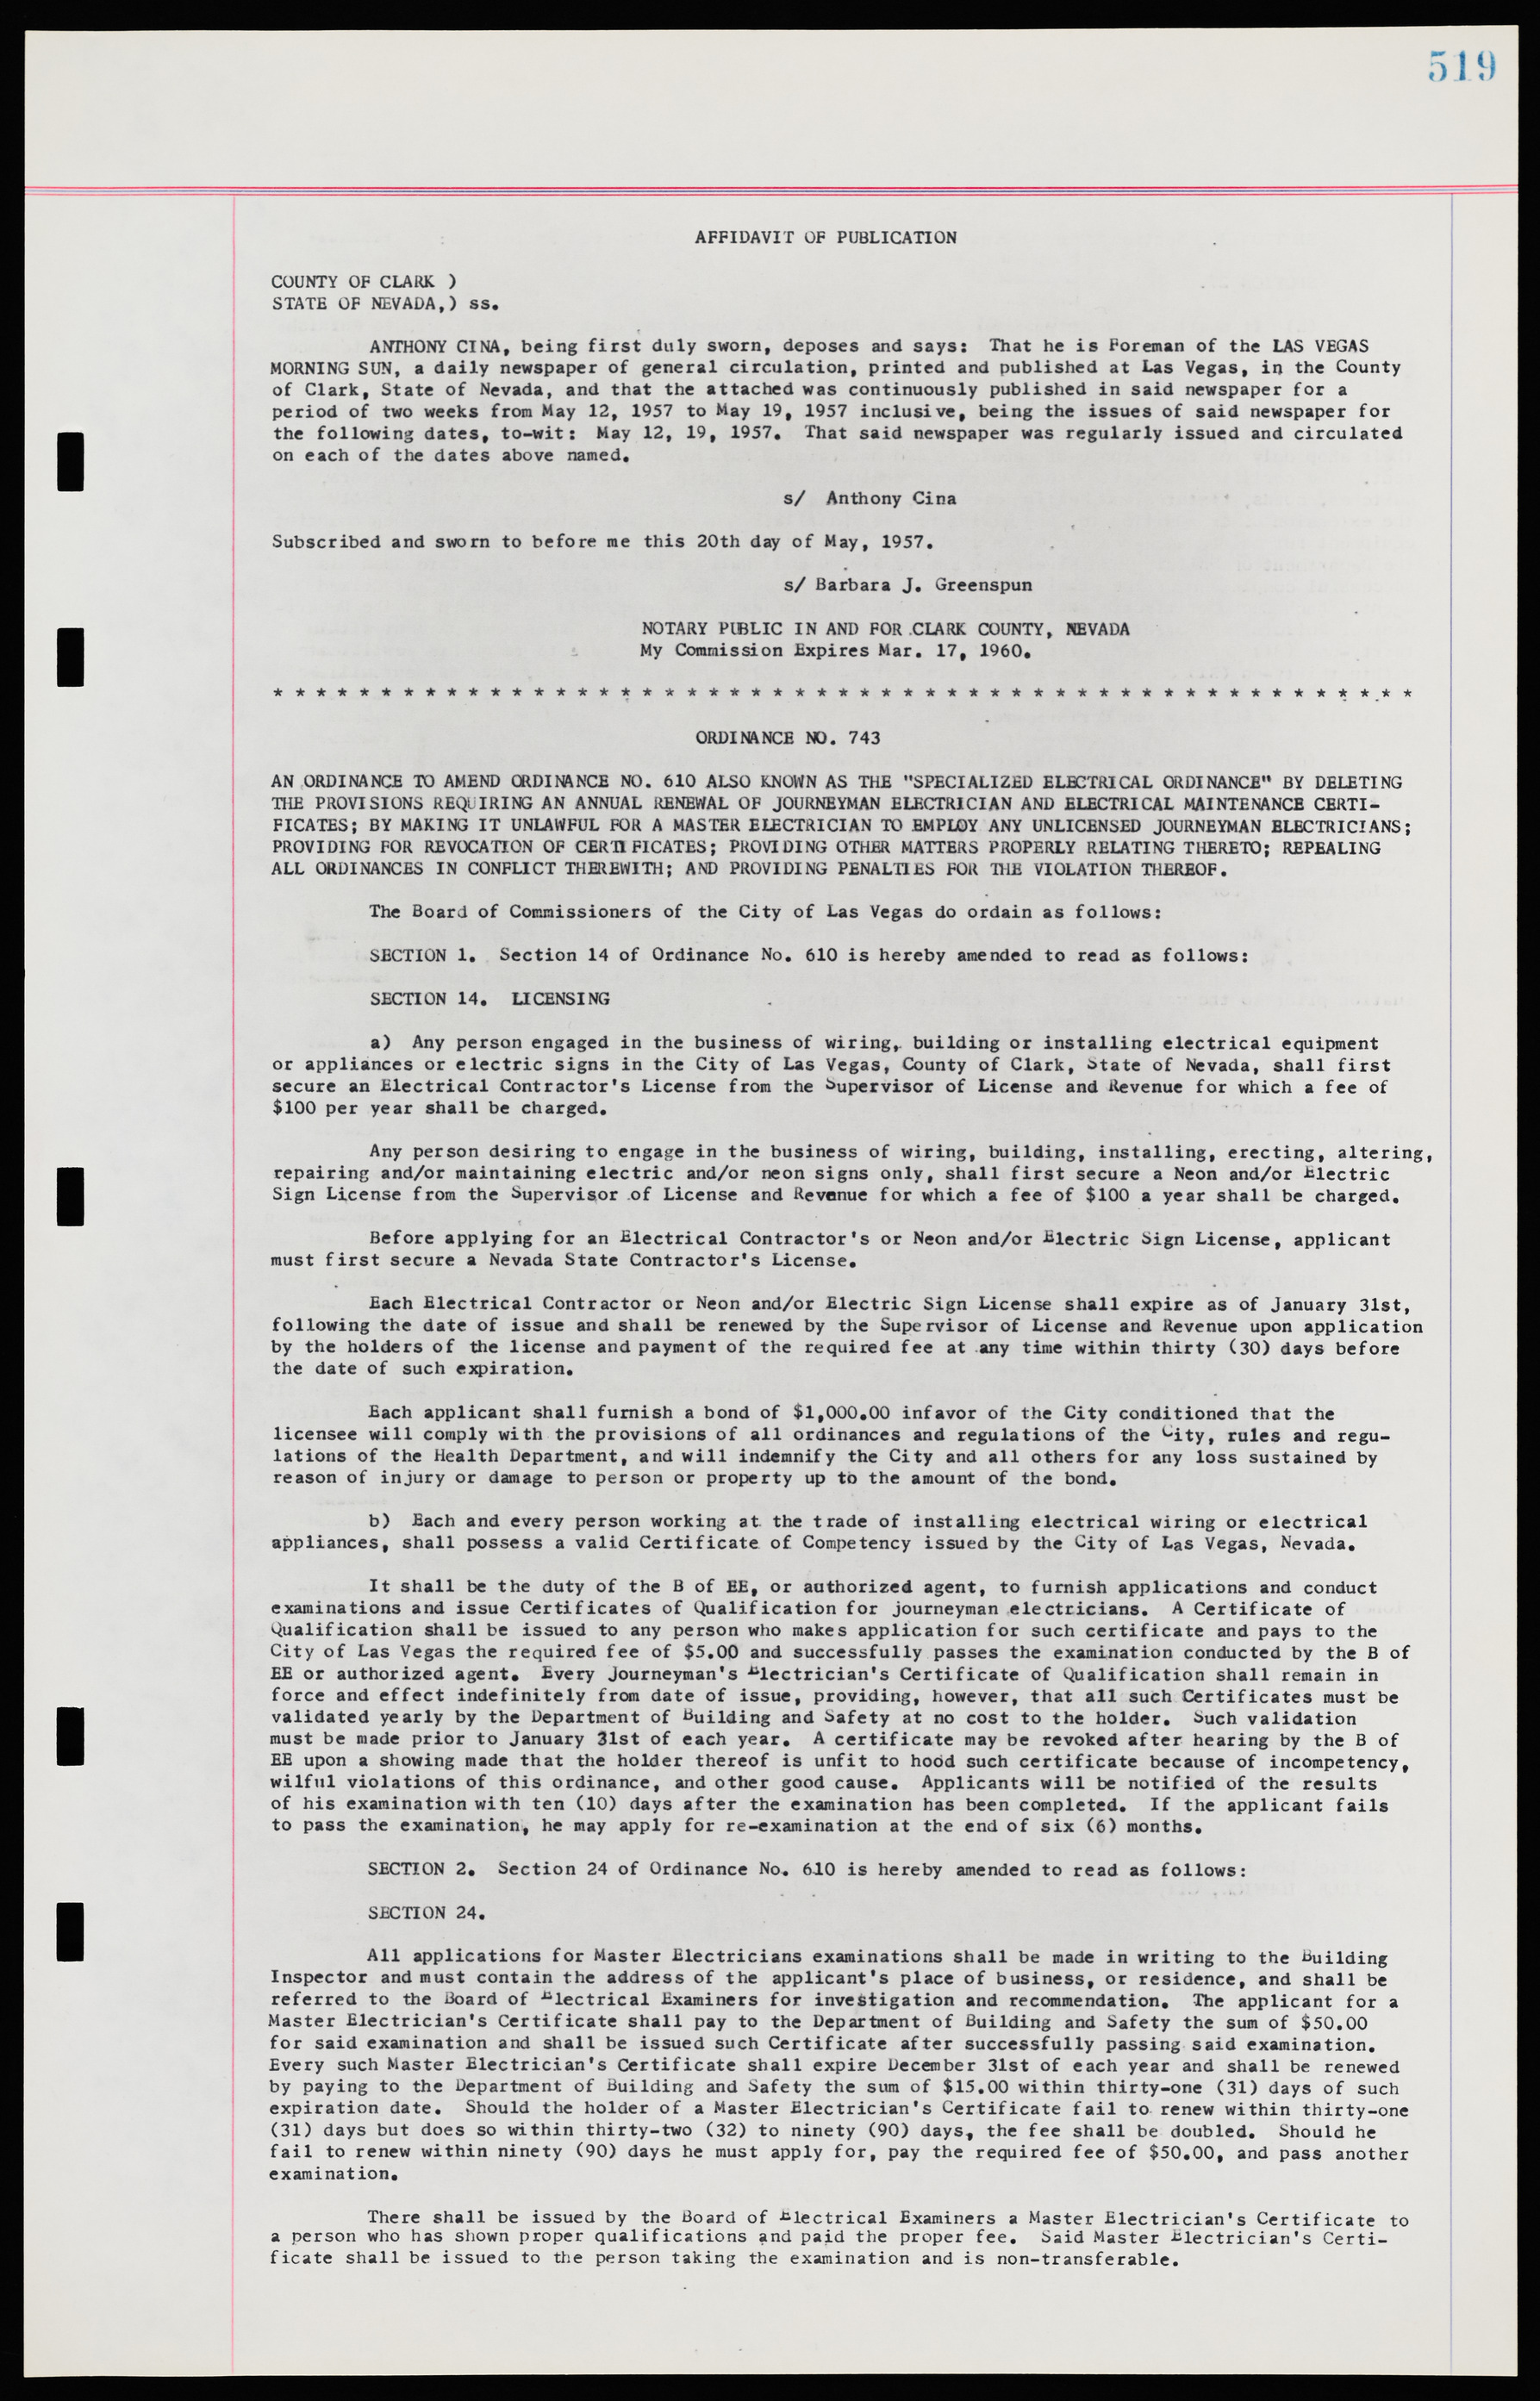 Las Vegas City Ordinances, November 13, 1950 to August 6, 1958, lvc000015-527